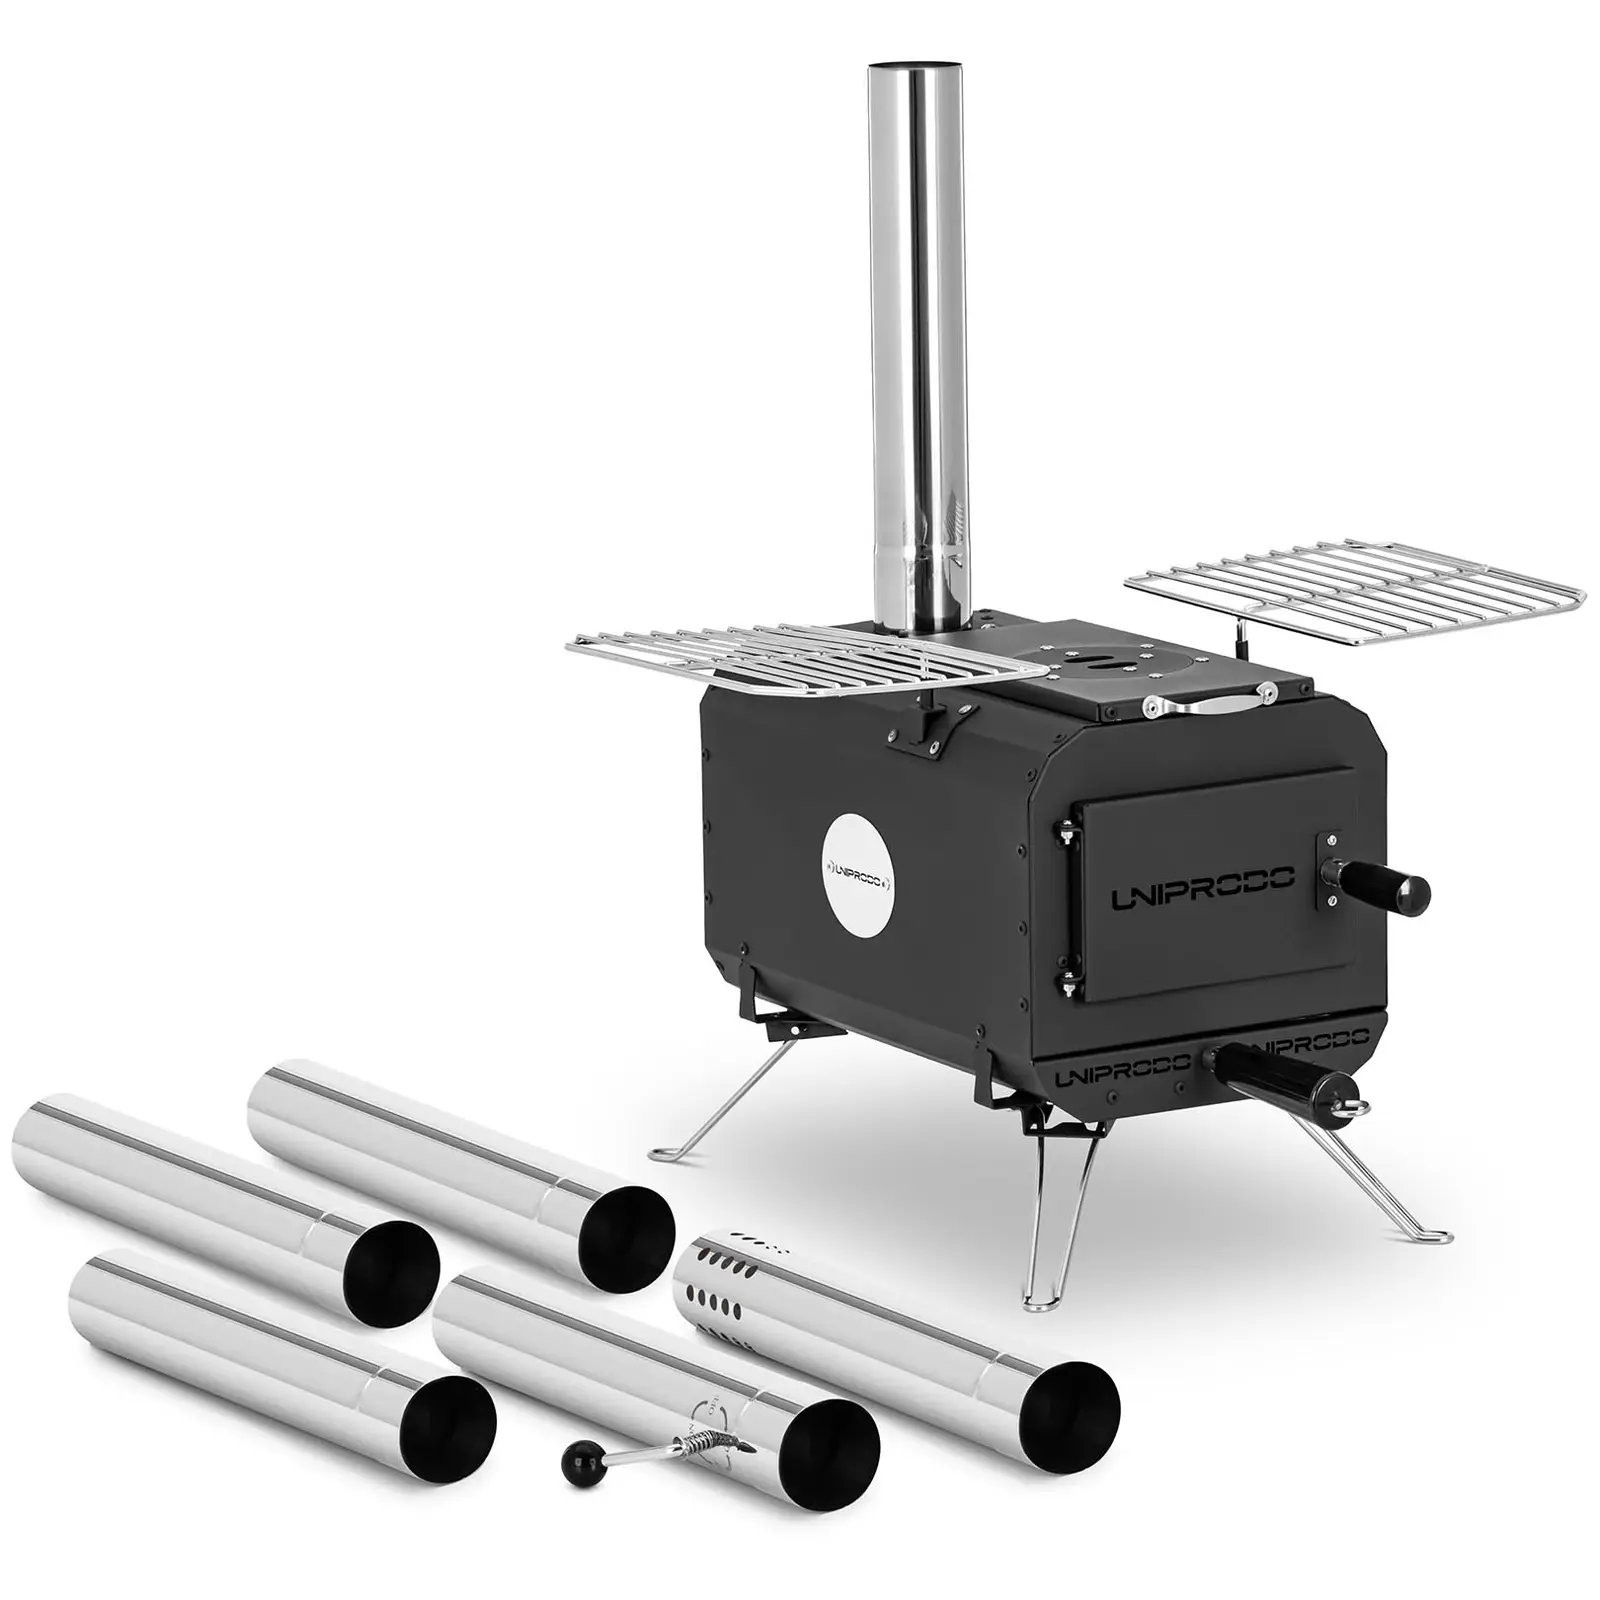 Tent stove - black - foldable - 382 x 250 x 231 mm - carbon steel